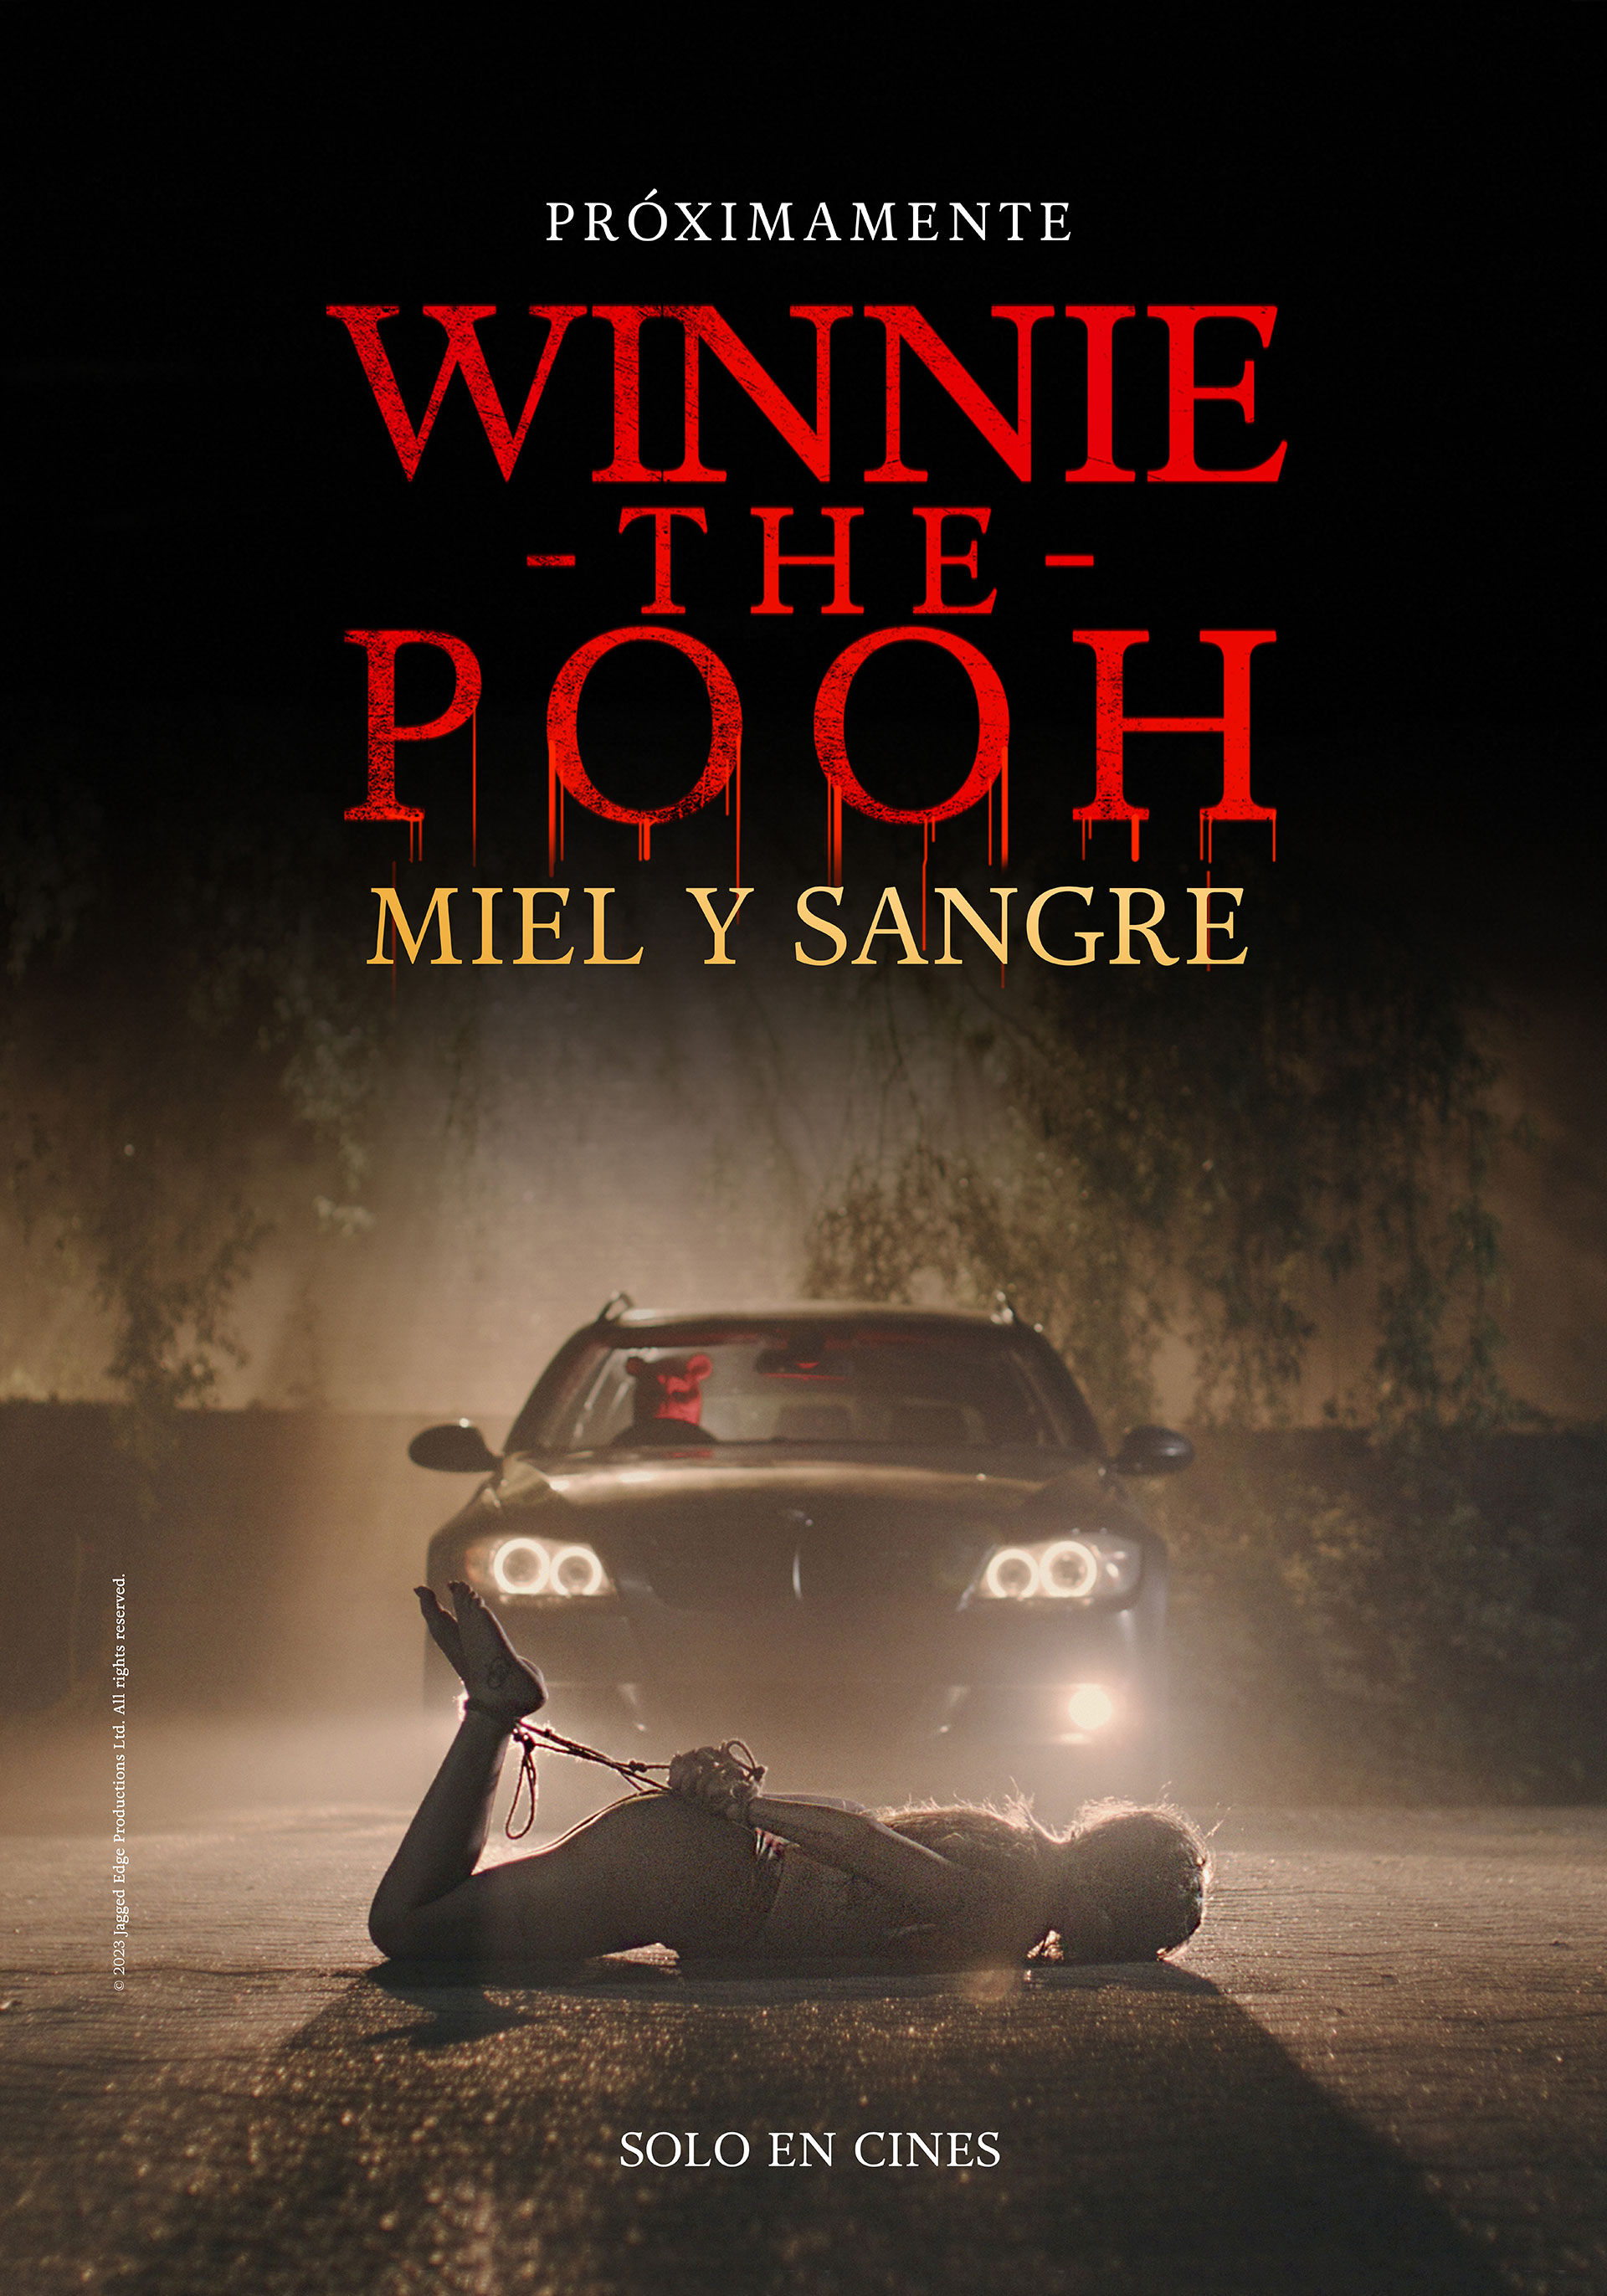 winnie the pooh miel y sangre poster espanol